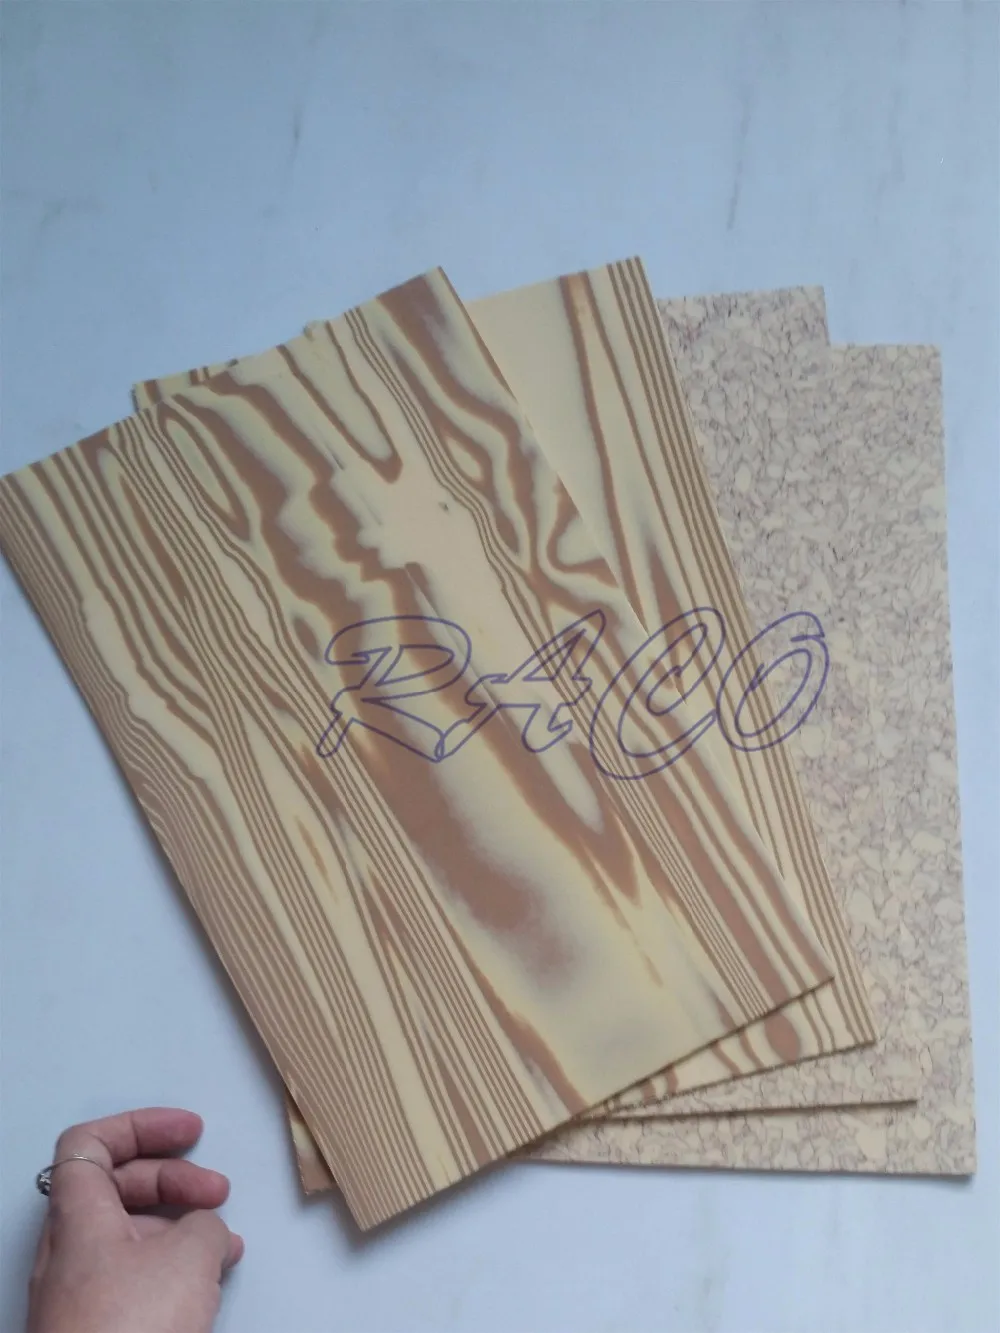 Wood Grain Designs Eva Foam Sheet For Floor Mat Or Wall ...